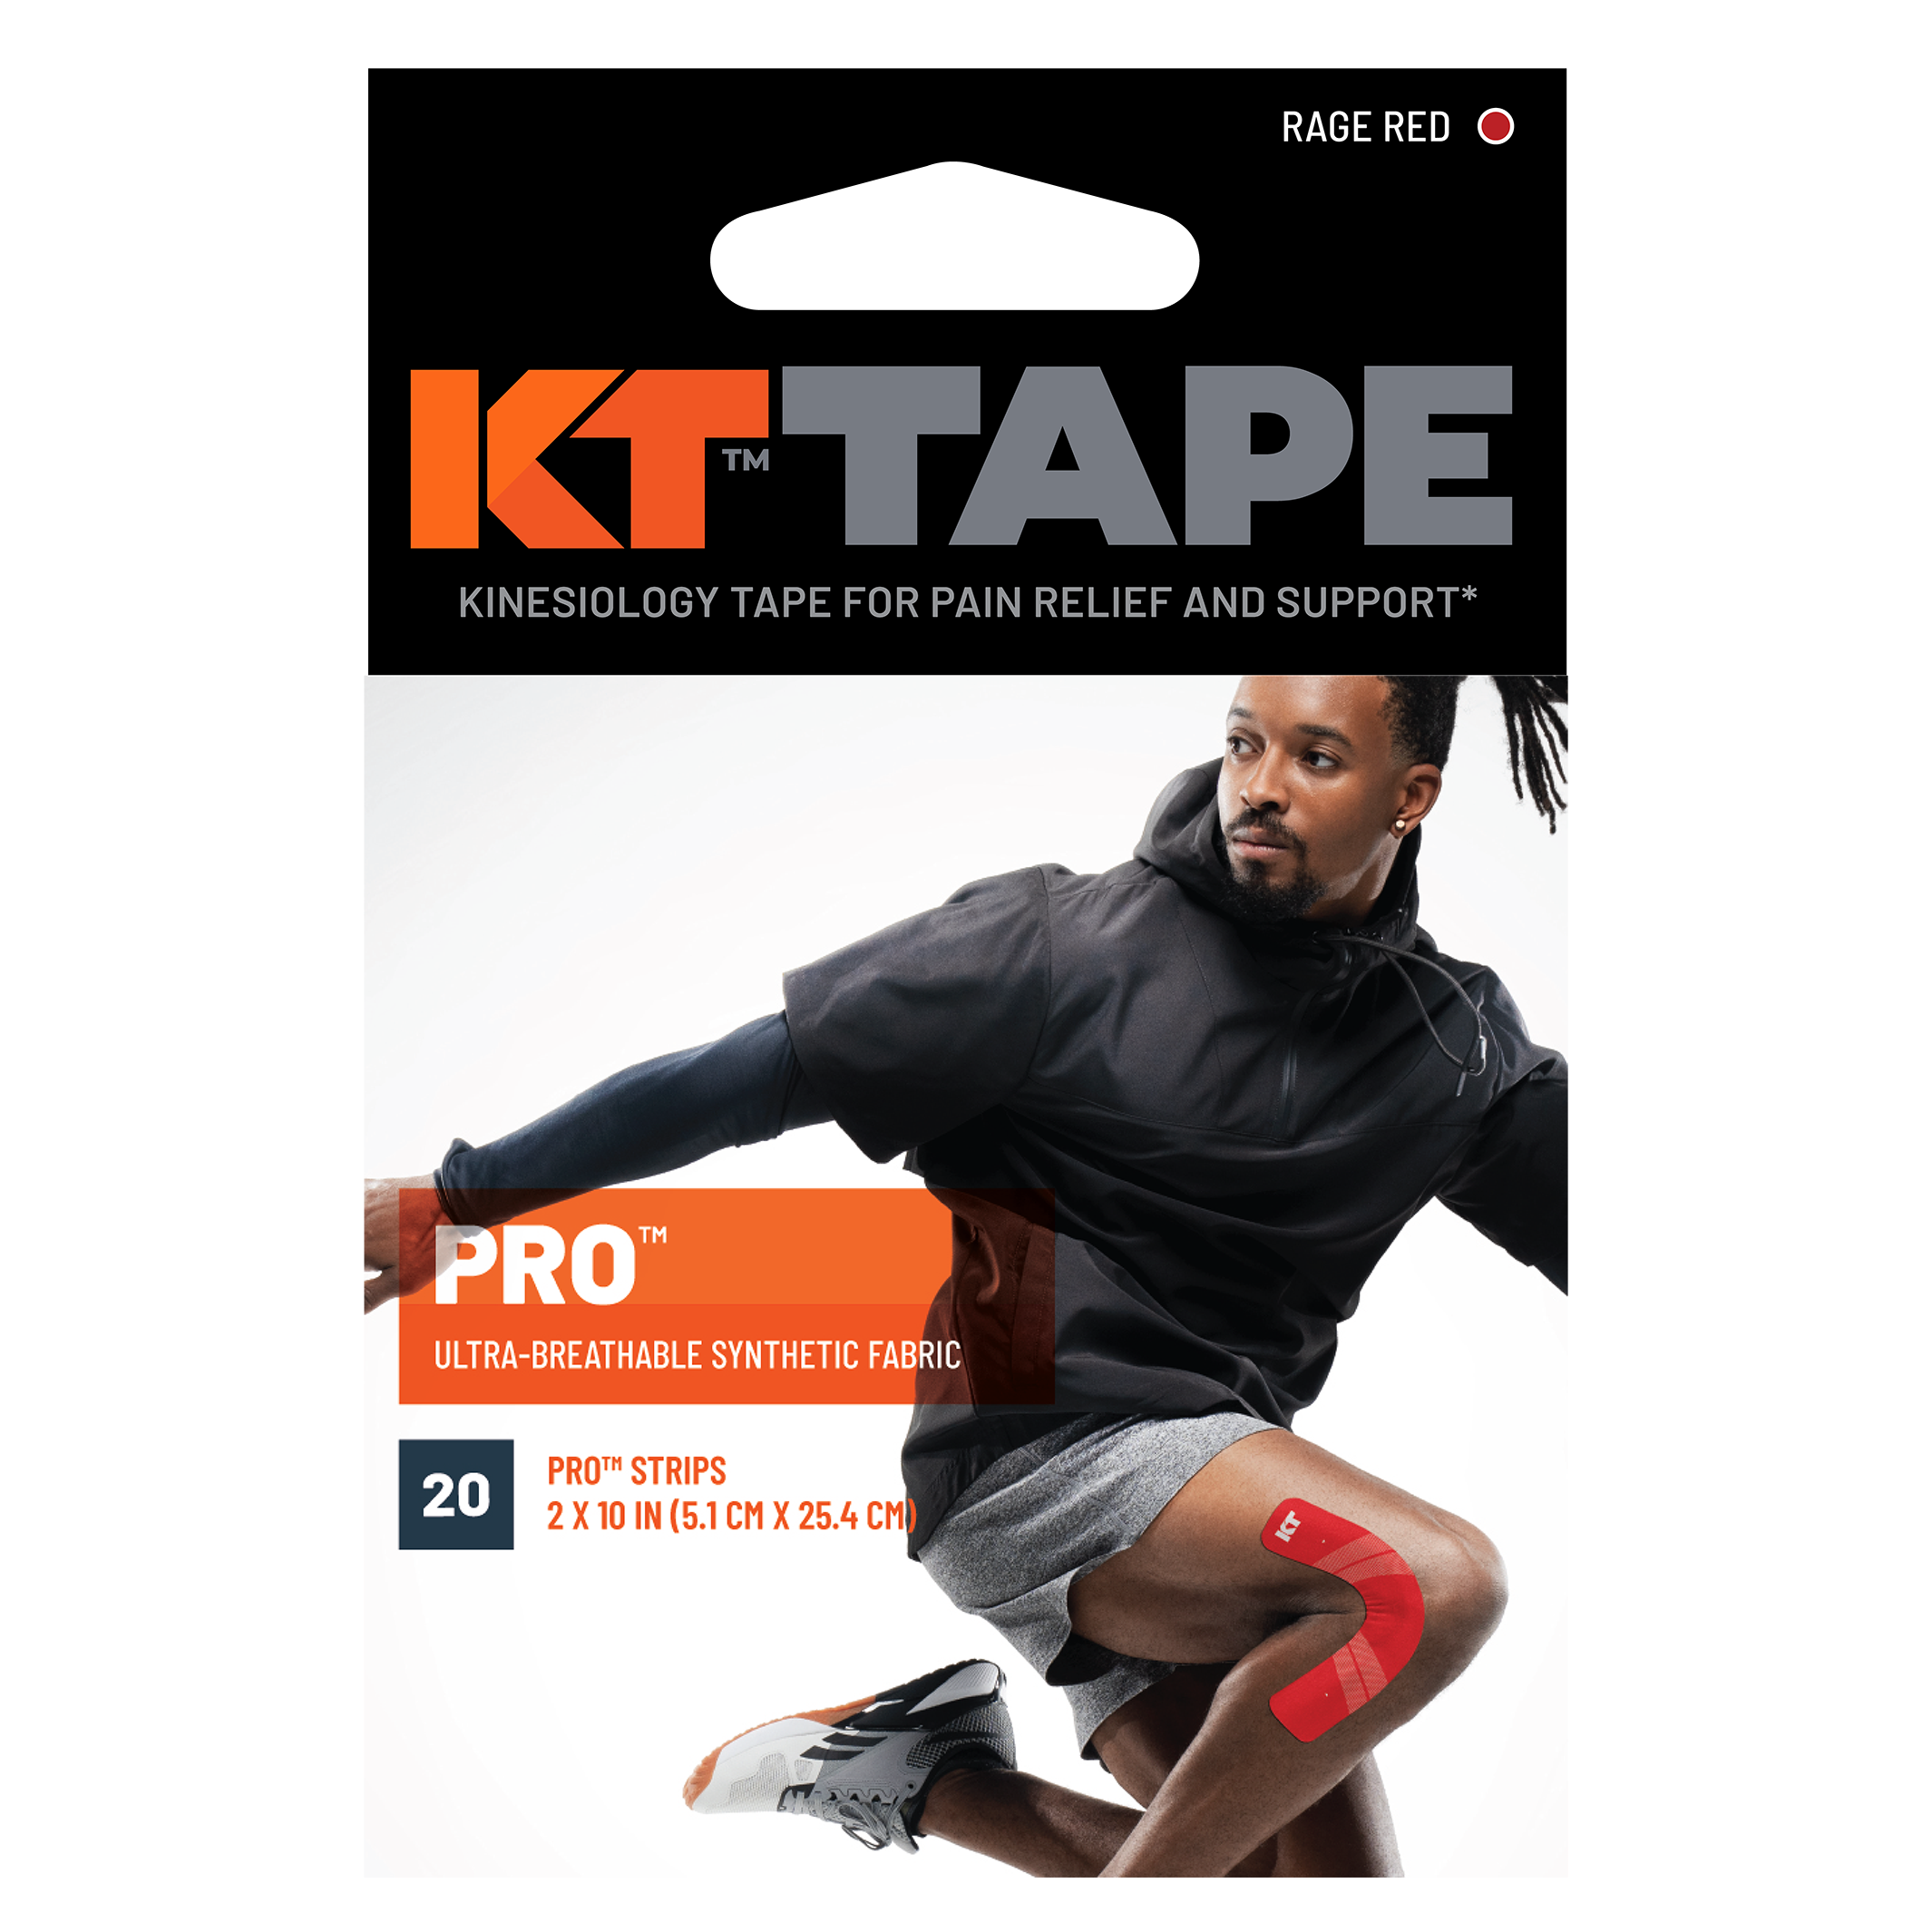 KT Tape Pro packaging#color_rage-red